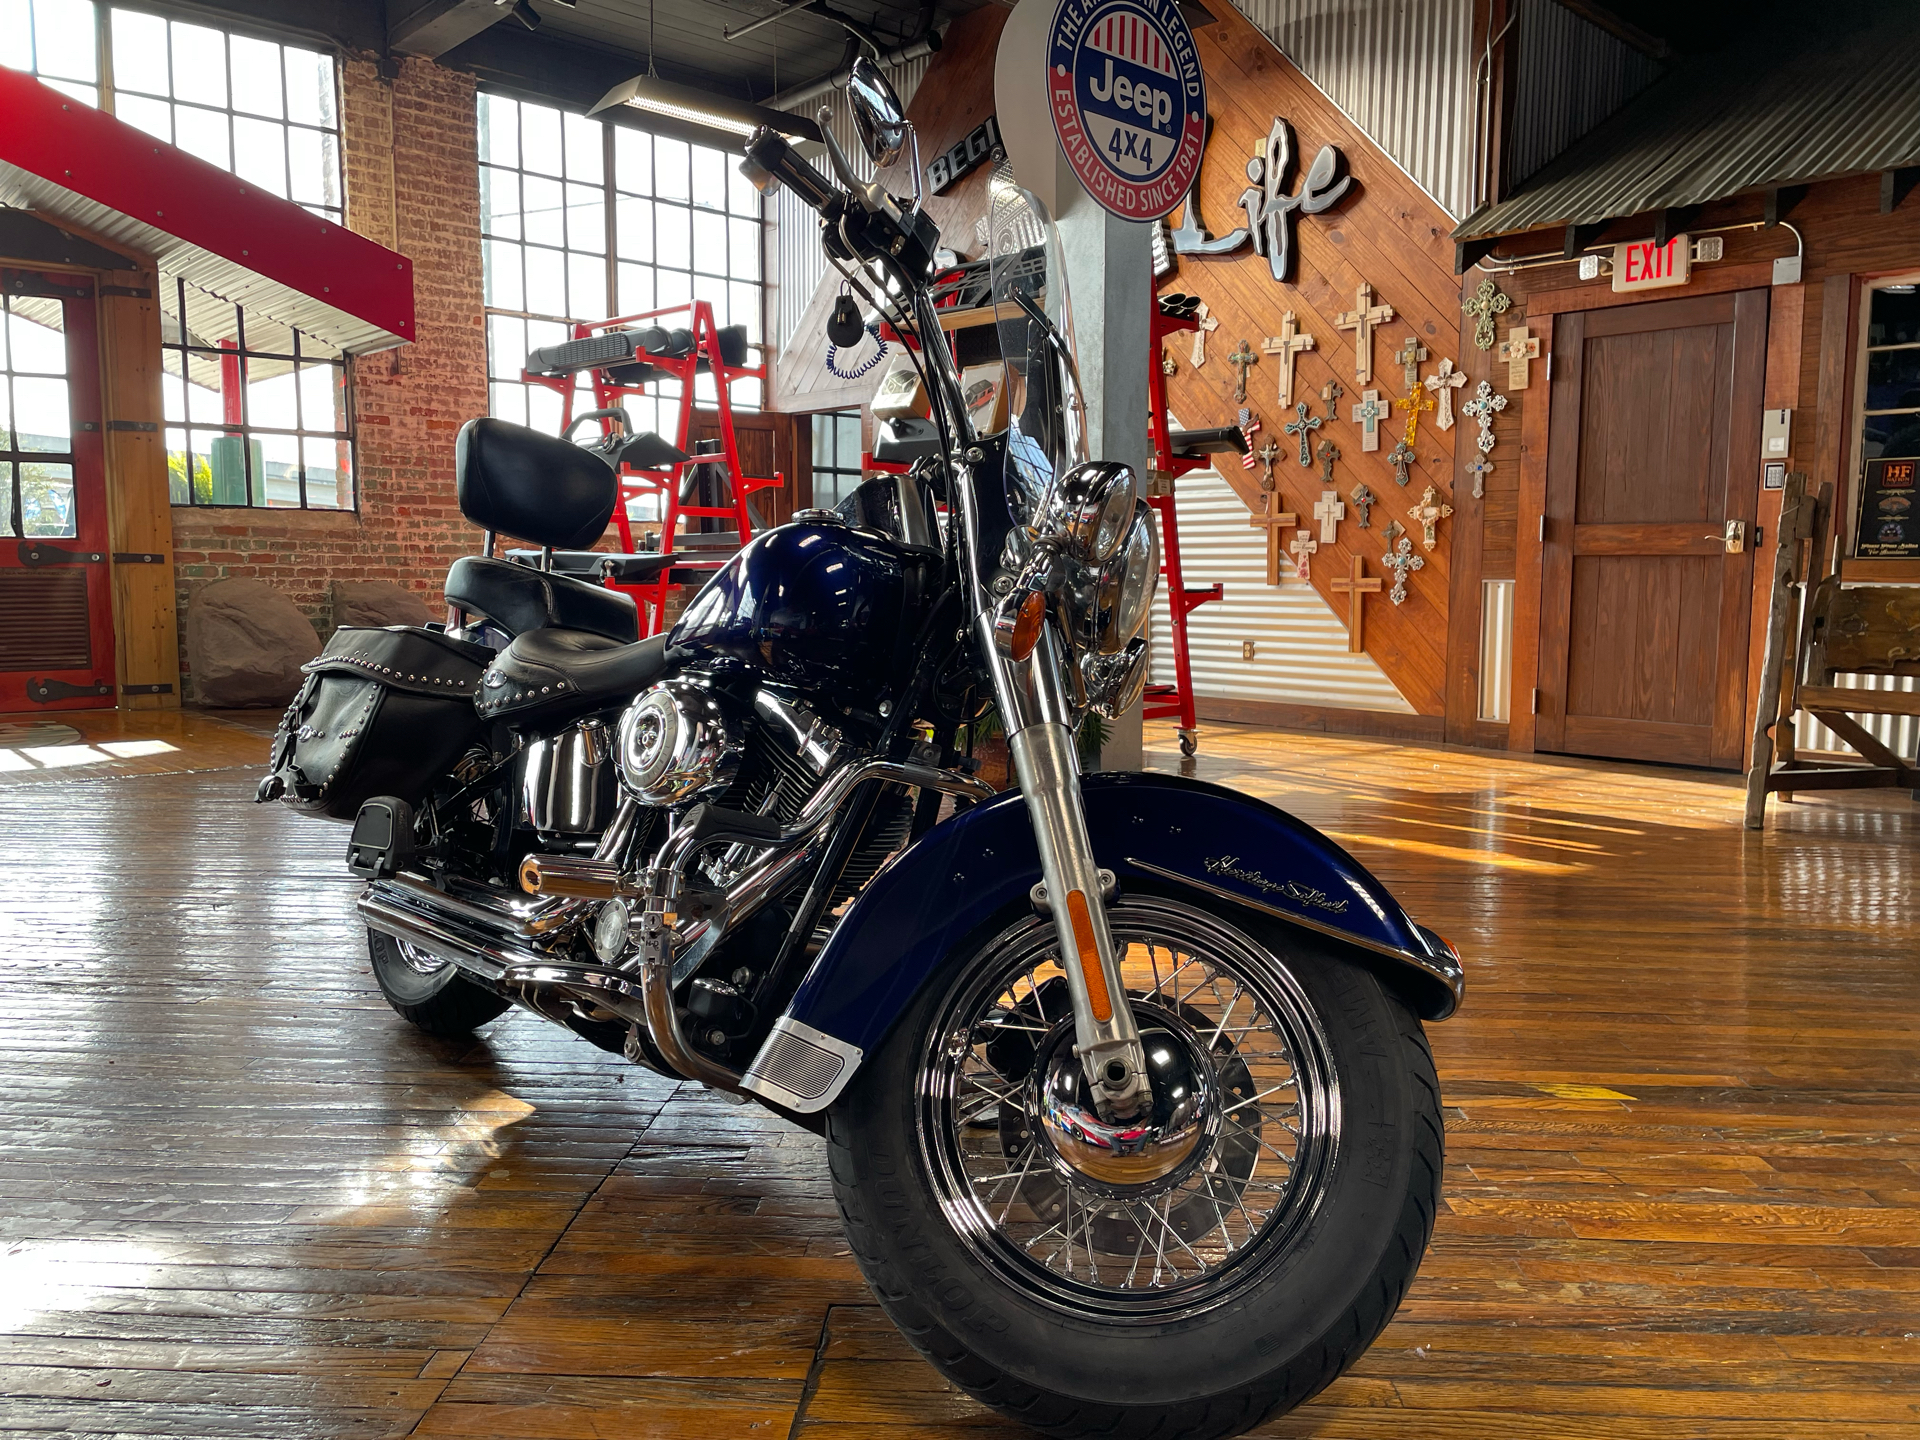 2007 Harley-Davidson Heritage Softail® Classic in Laurel, Mississippi - Photo 8